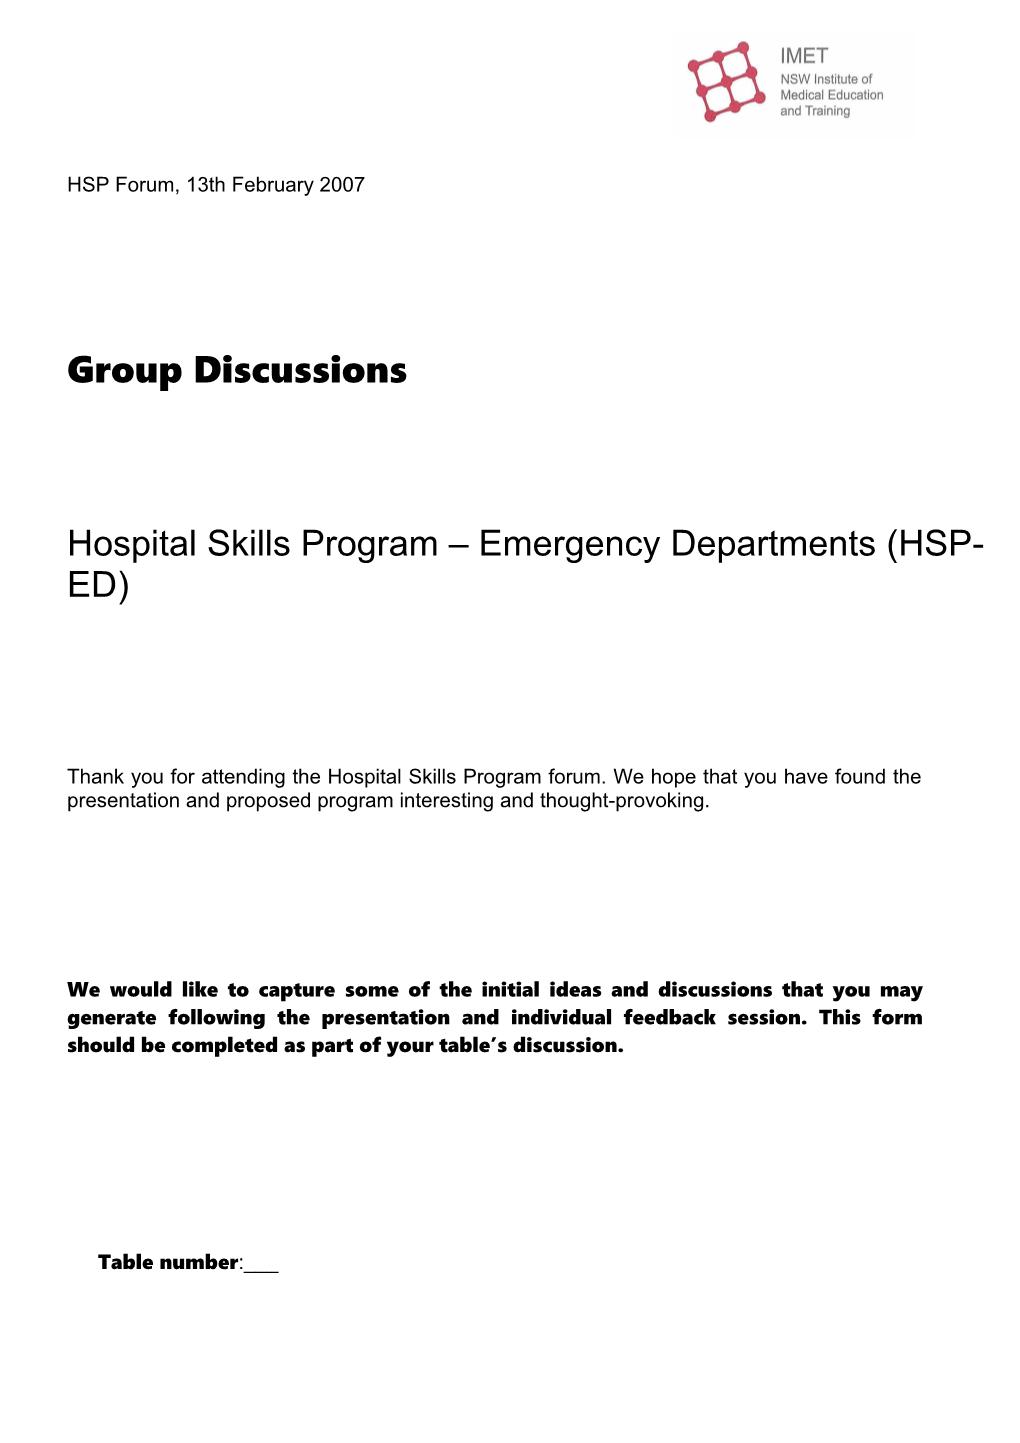 Hospital Skills Program Emergency Departments(HSP-ED)